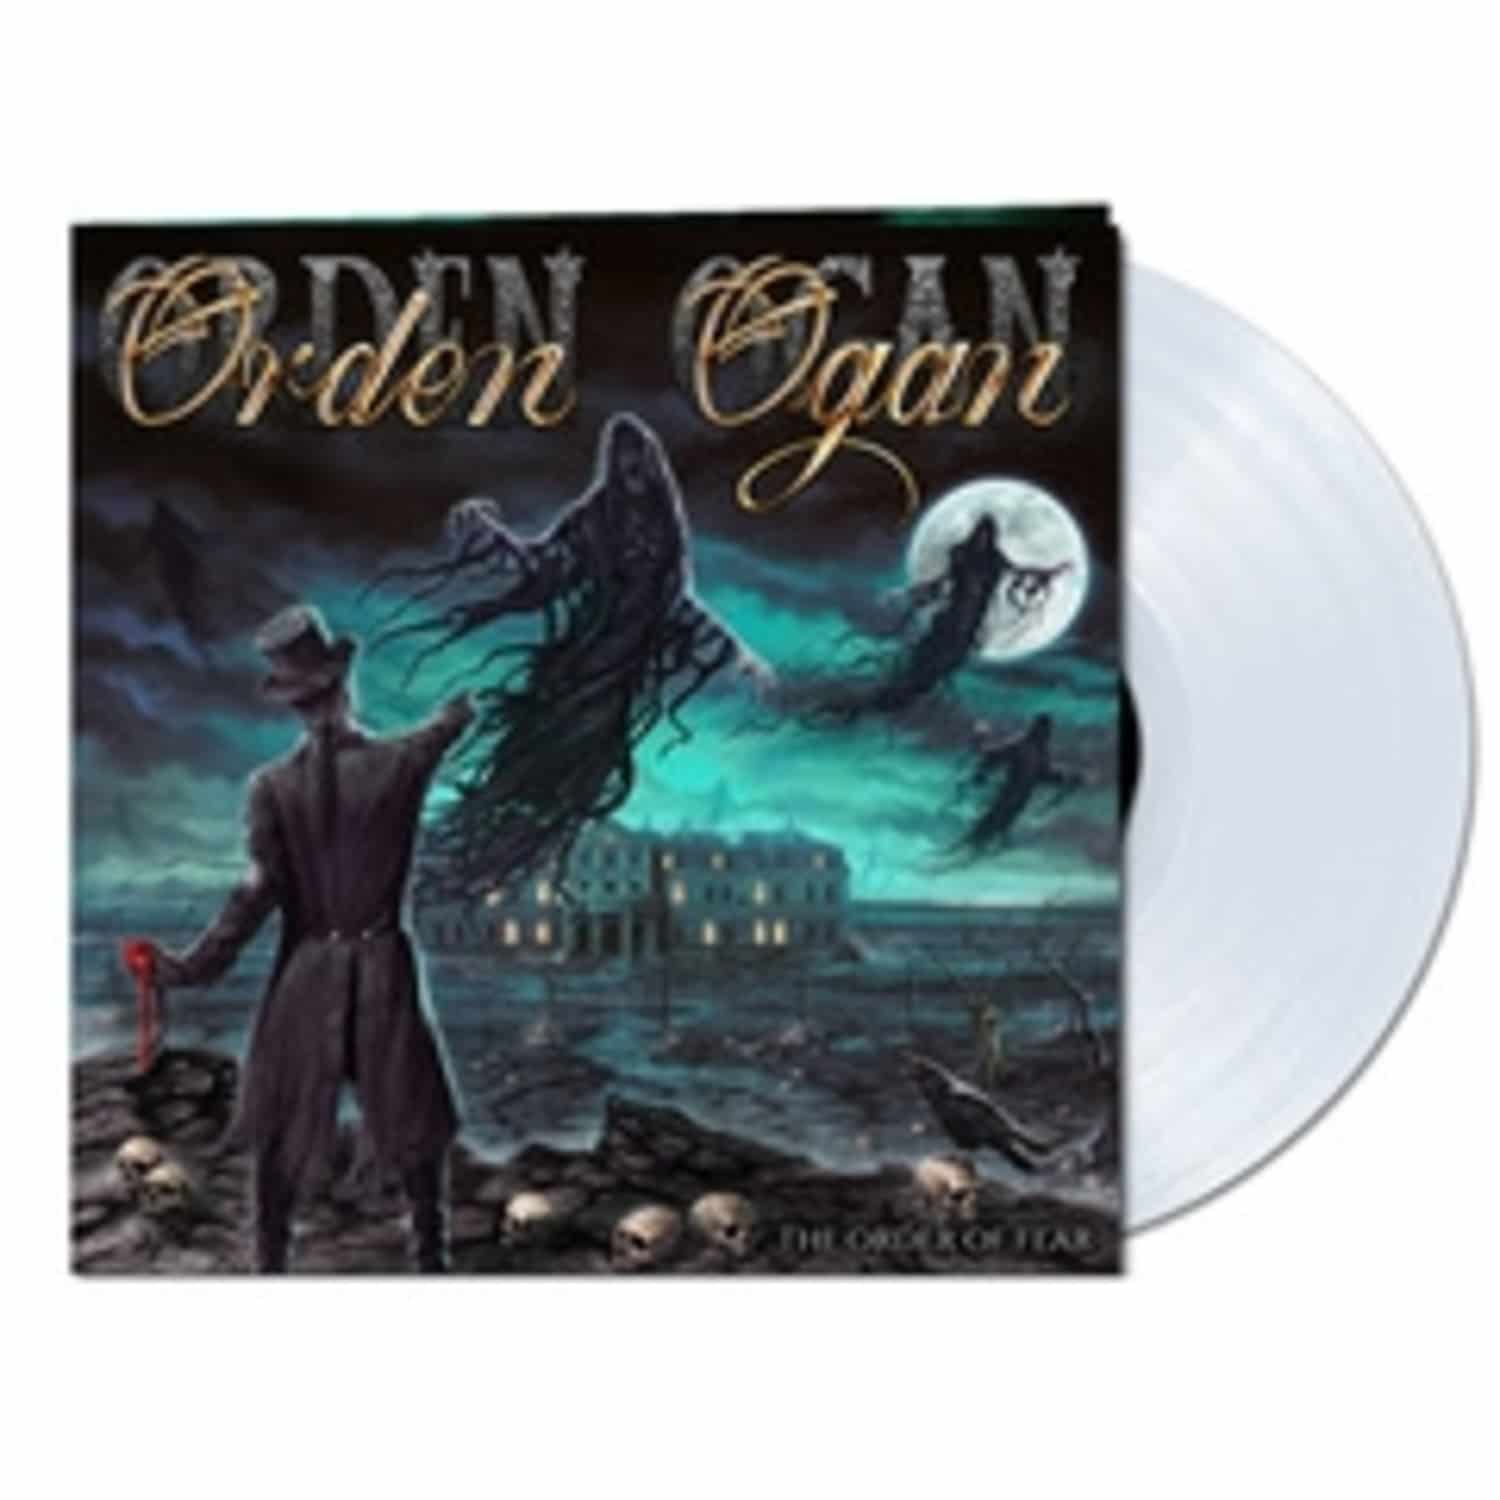 Orden Ogan - THE ORDER OF FEAR 